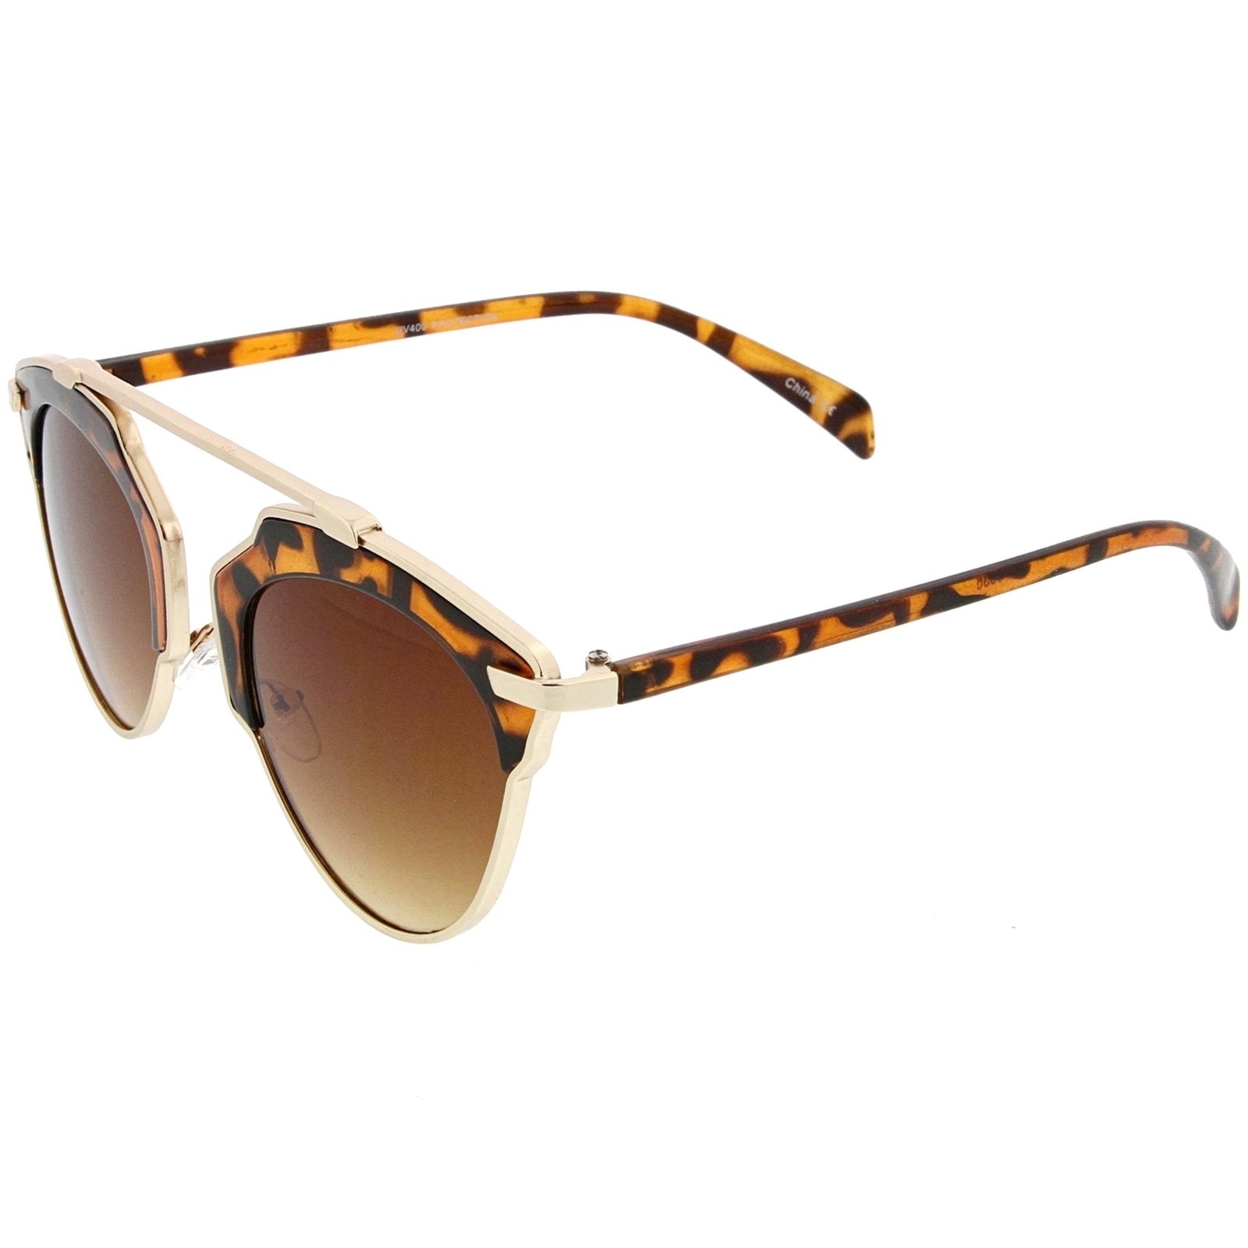 High Fashion Two-Toned Pantos Crossbar Tinted Lens Aviator Sunglasses 52mm - Tortoise-Gold / Amber